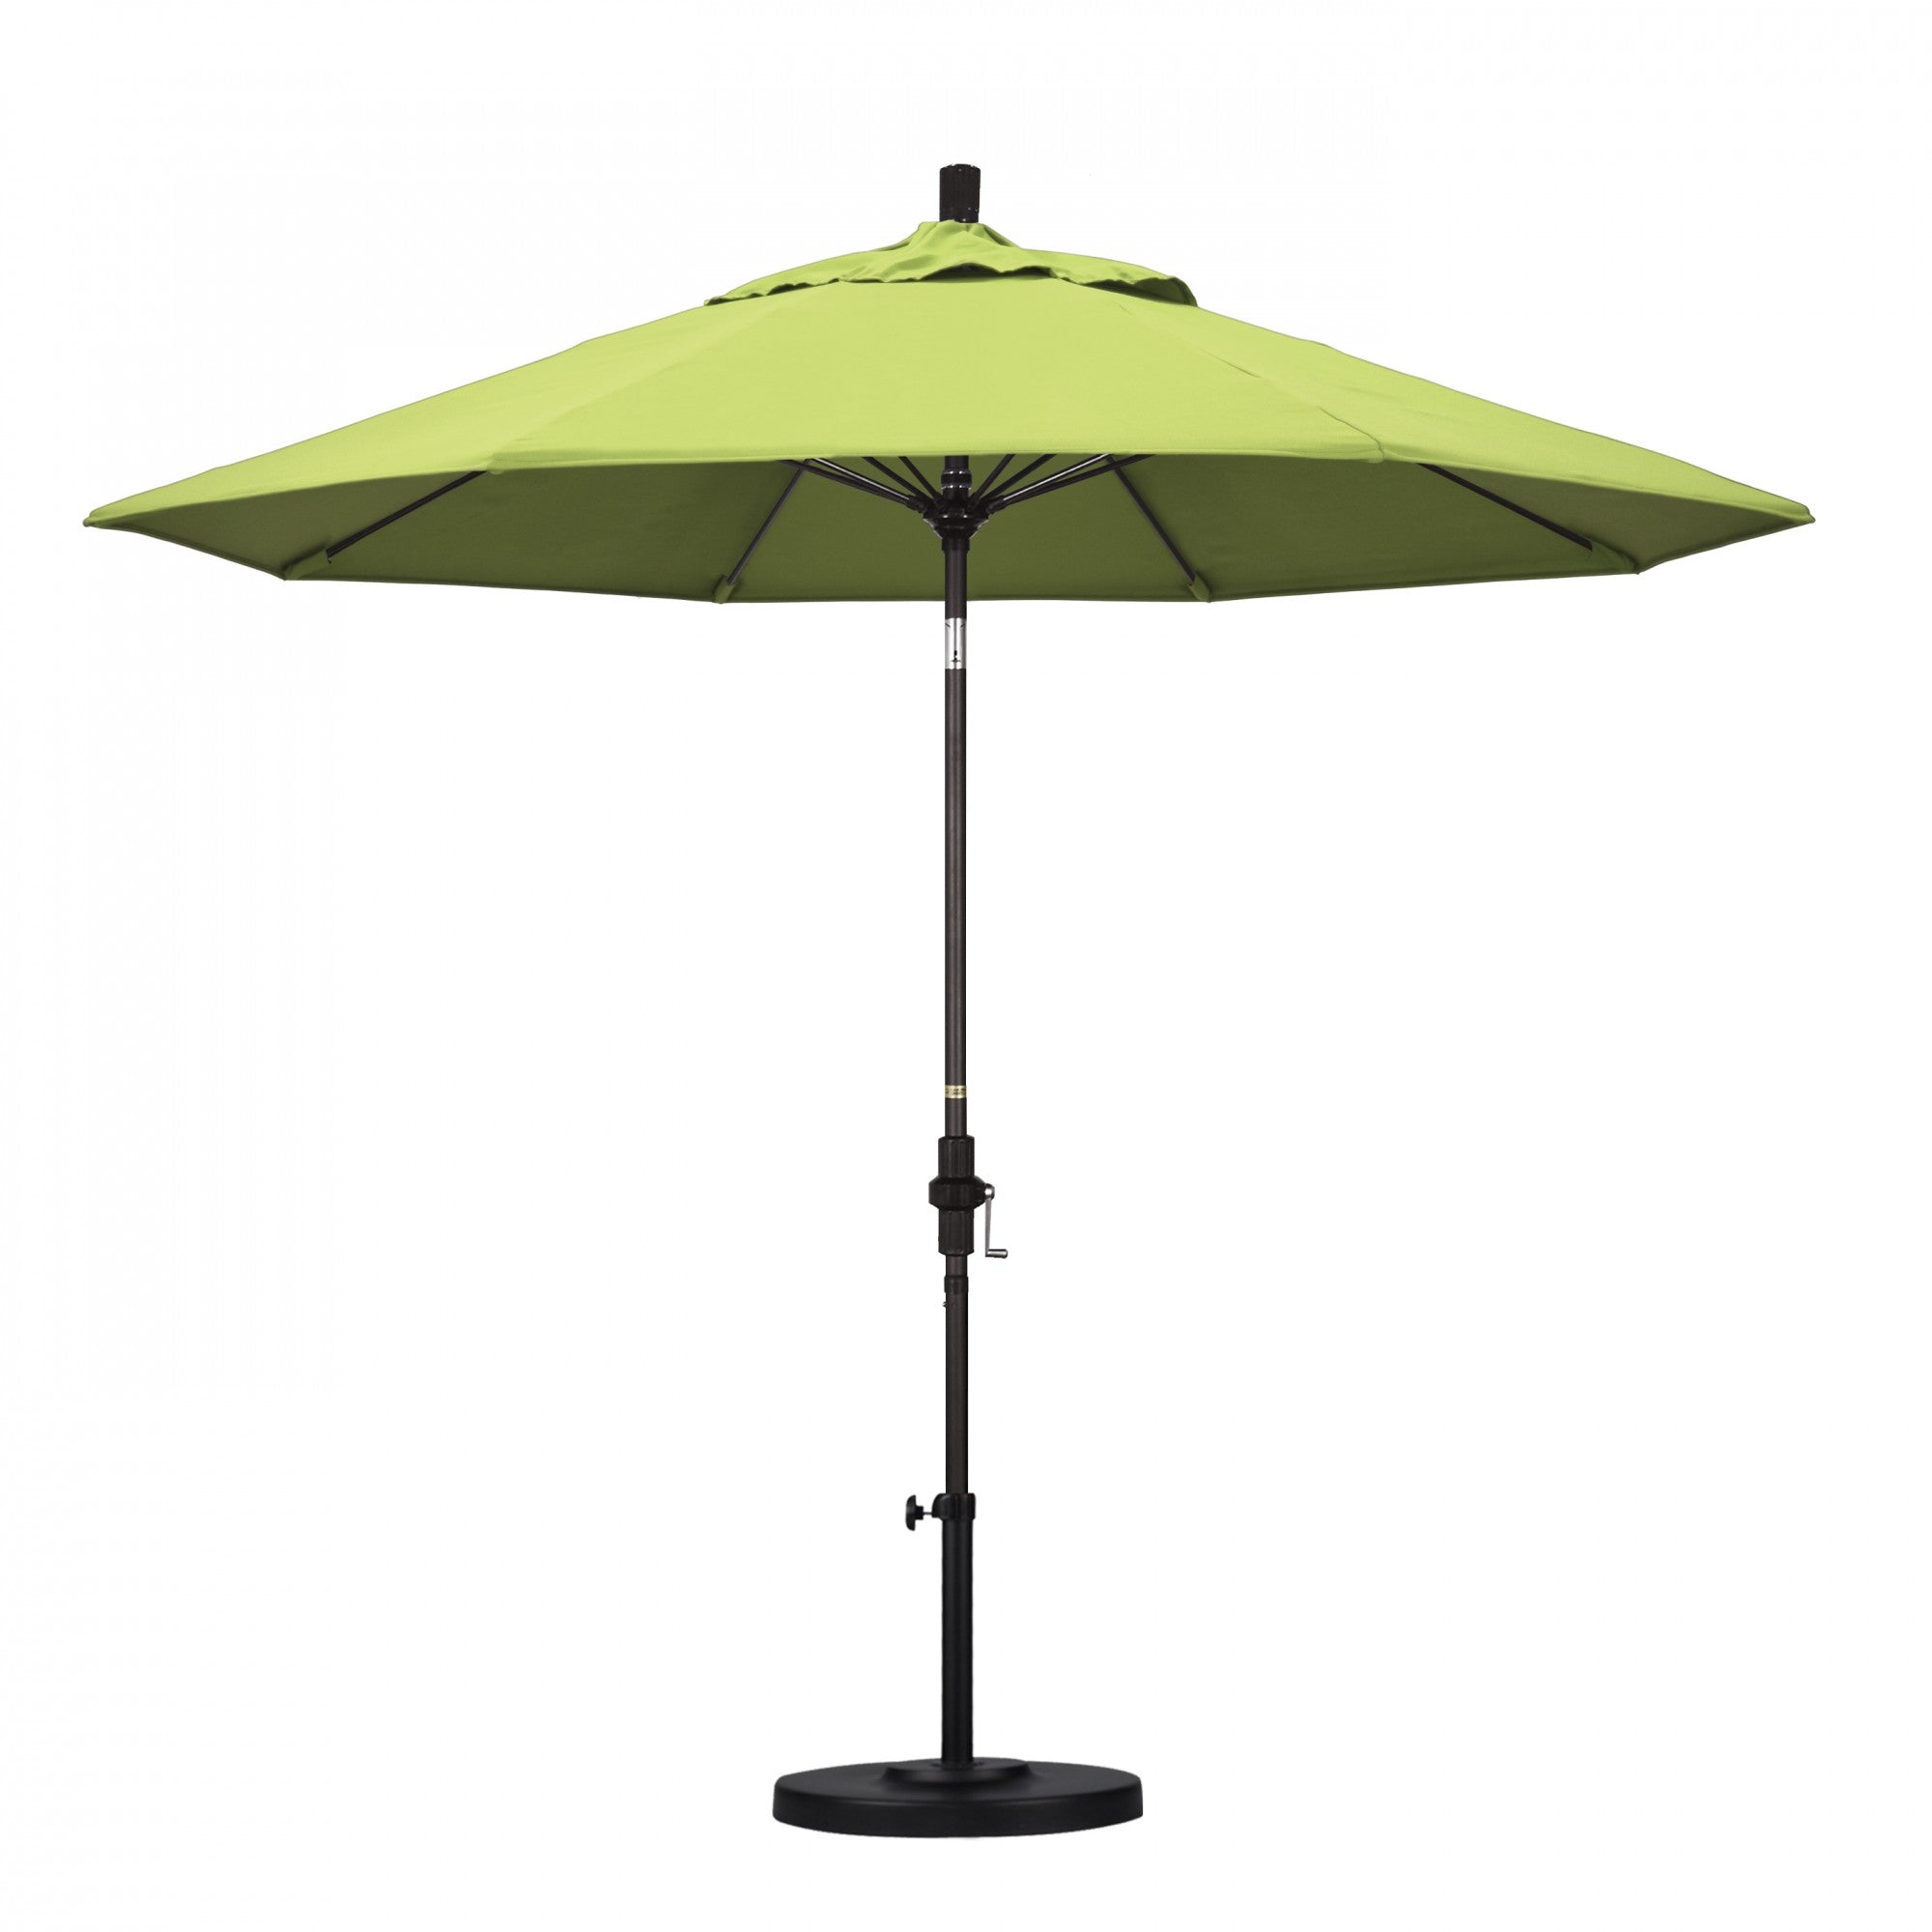 California Umbrella - 9' - Patio Umbrella Umbrella - Aluminum Pole - Parrot - Sunbrella  - GSCUF908117-5405